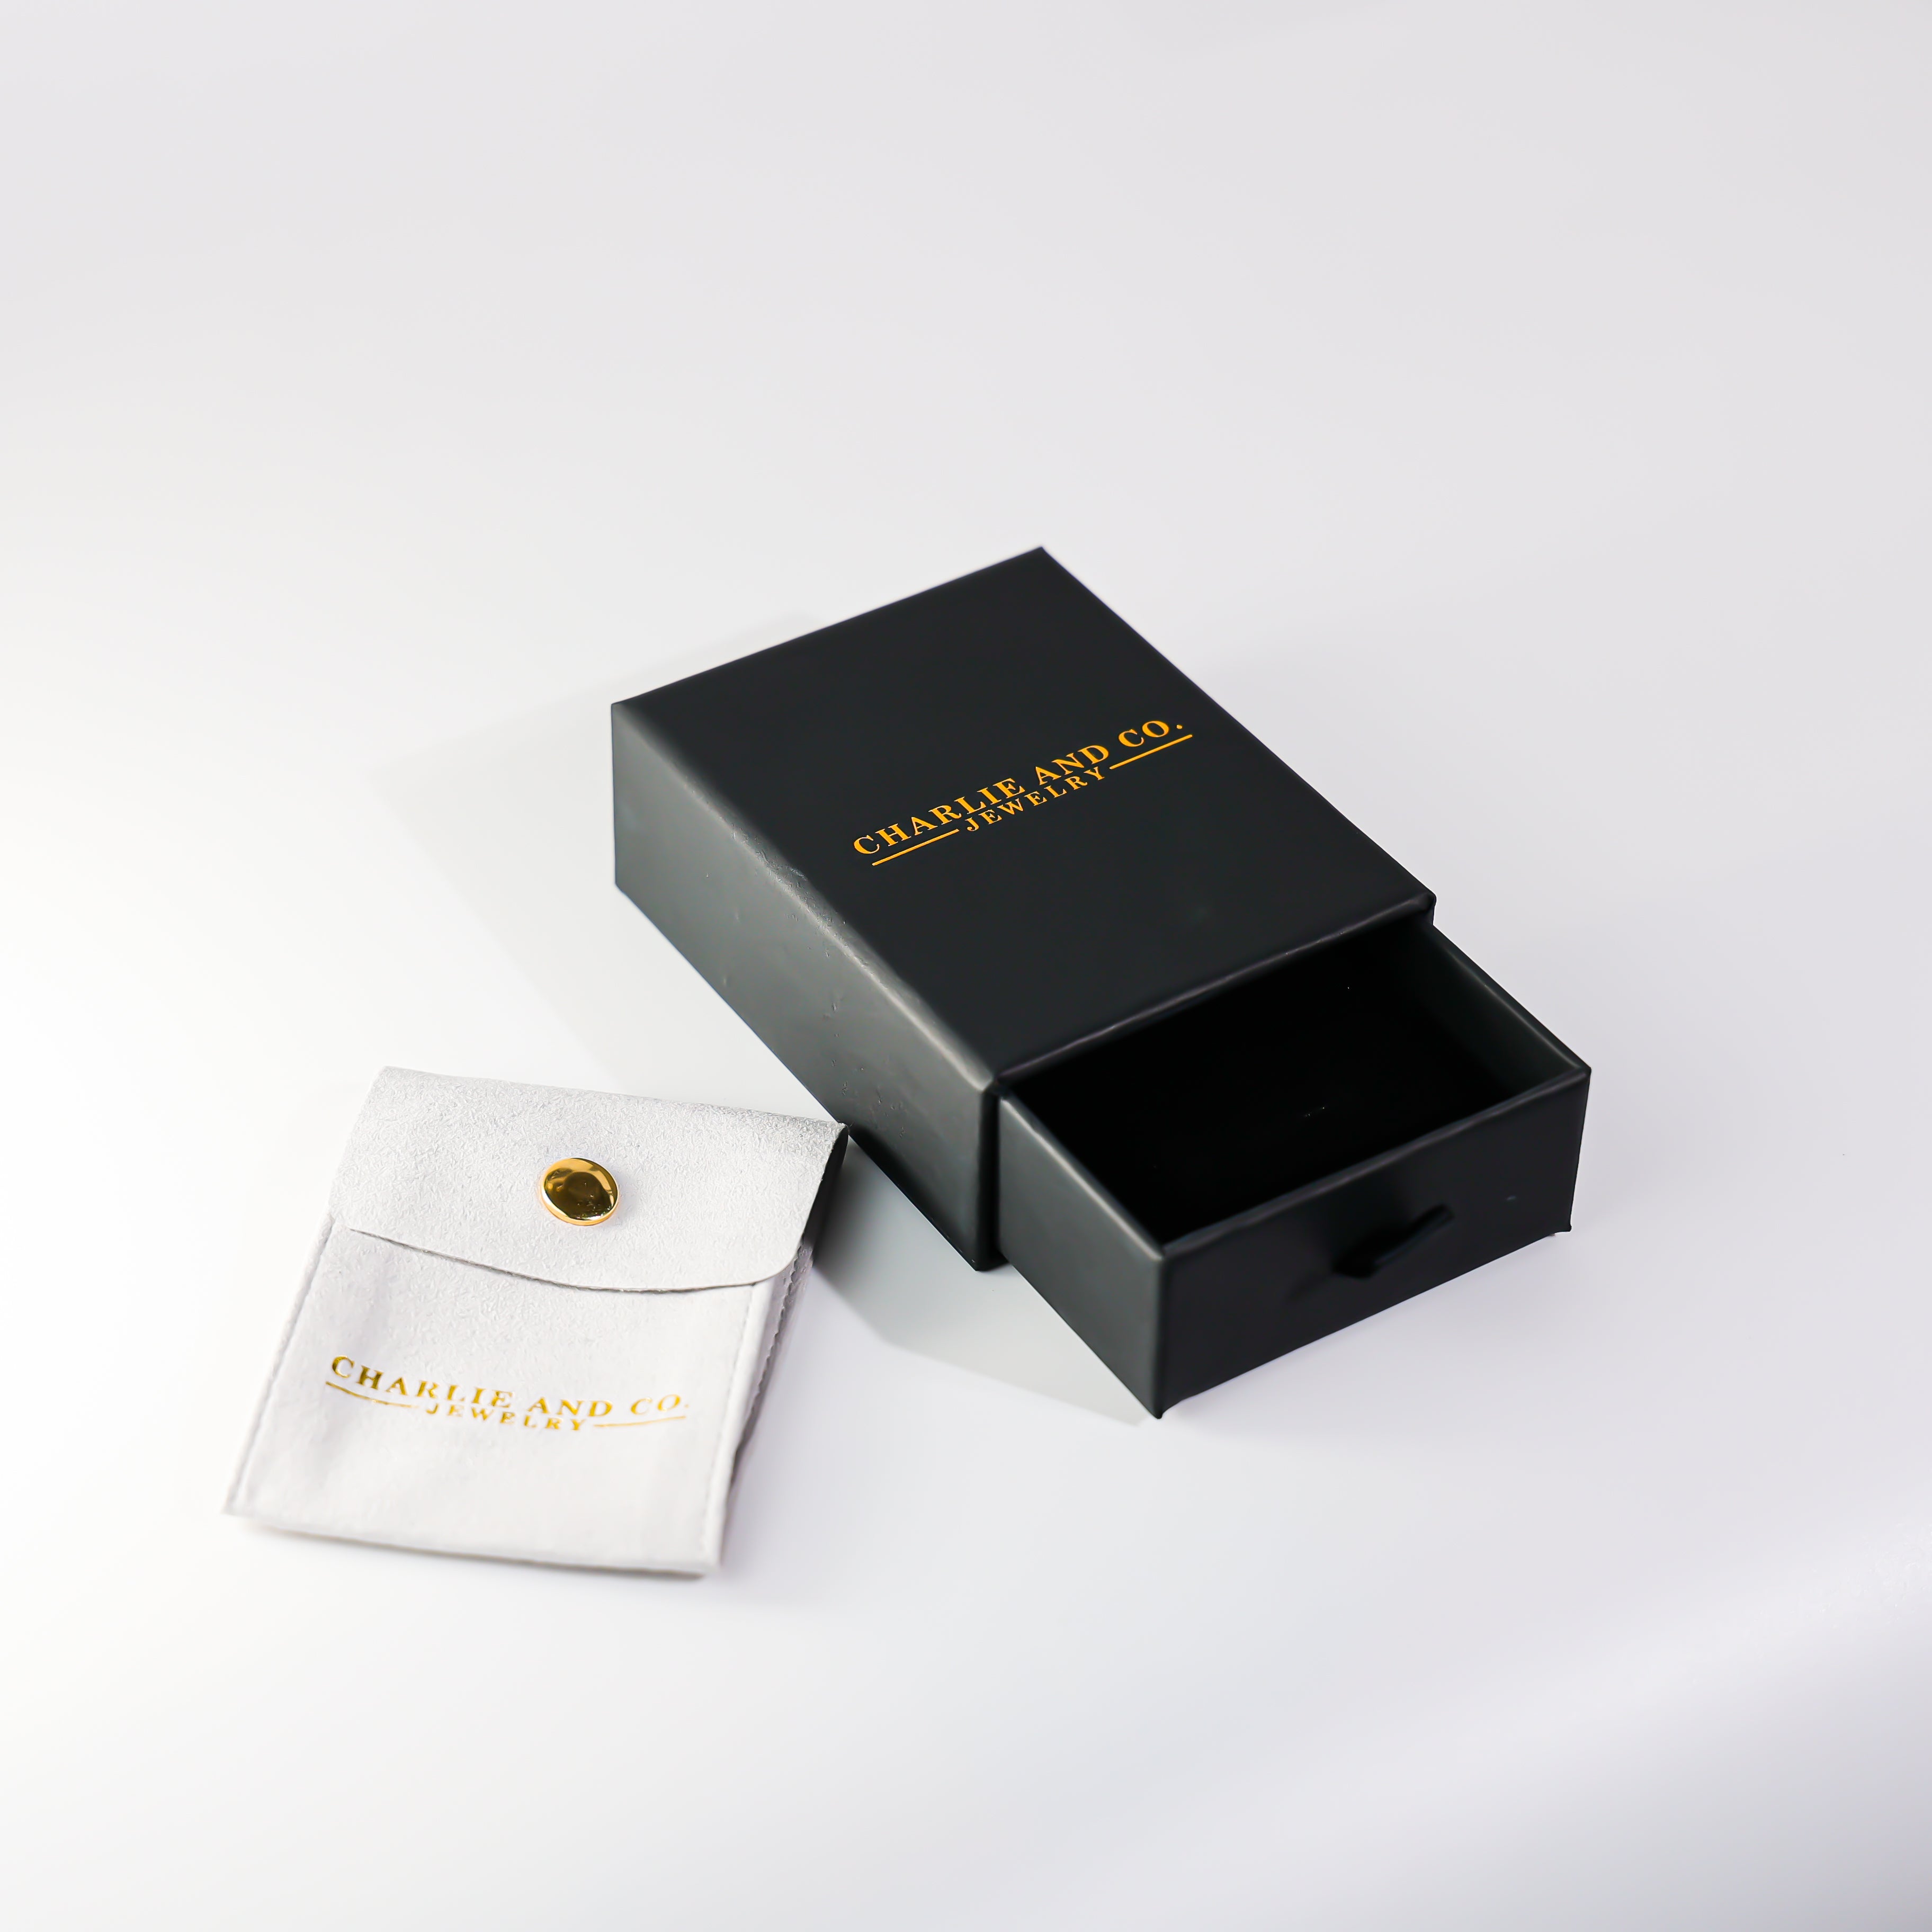 14K Gold Madi K CZ Turtle Post Earrings - Charlie & Co. Jewelry